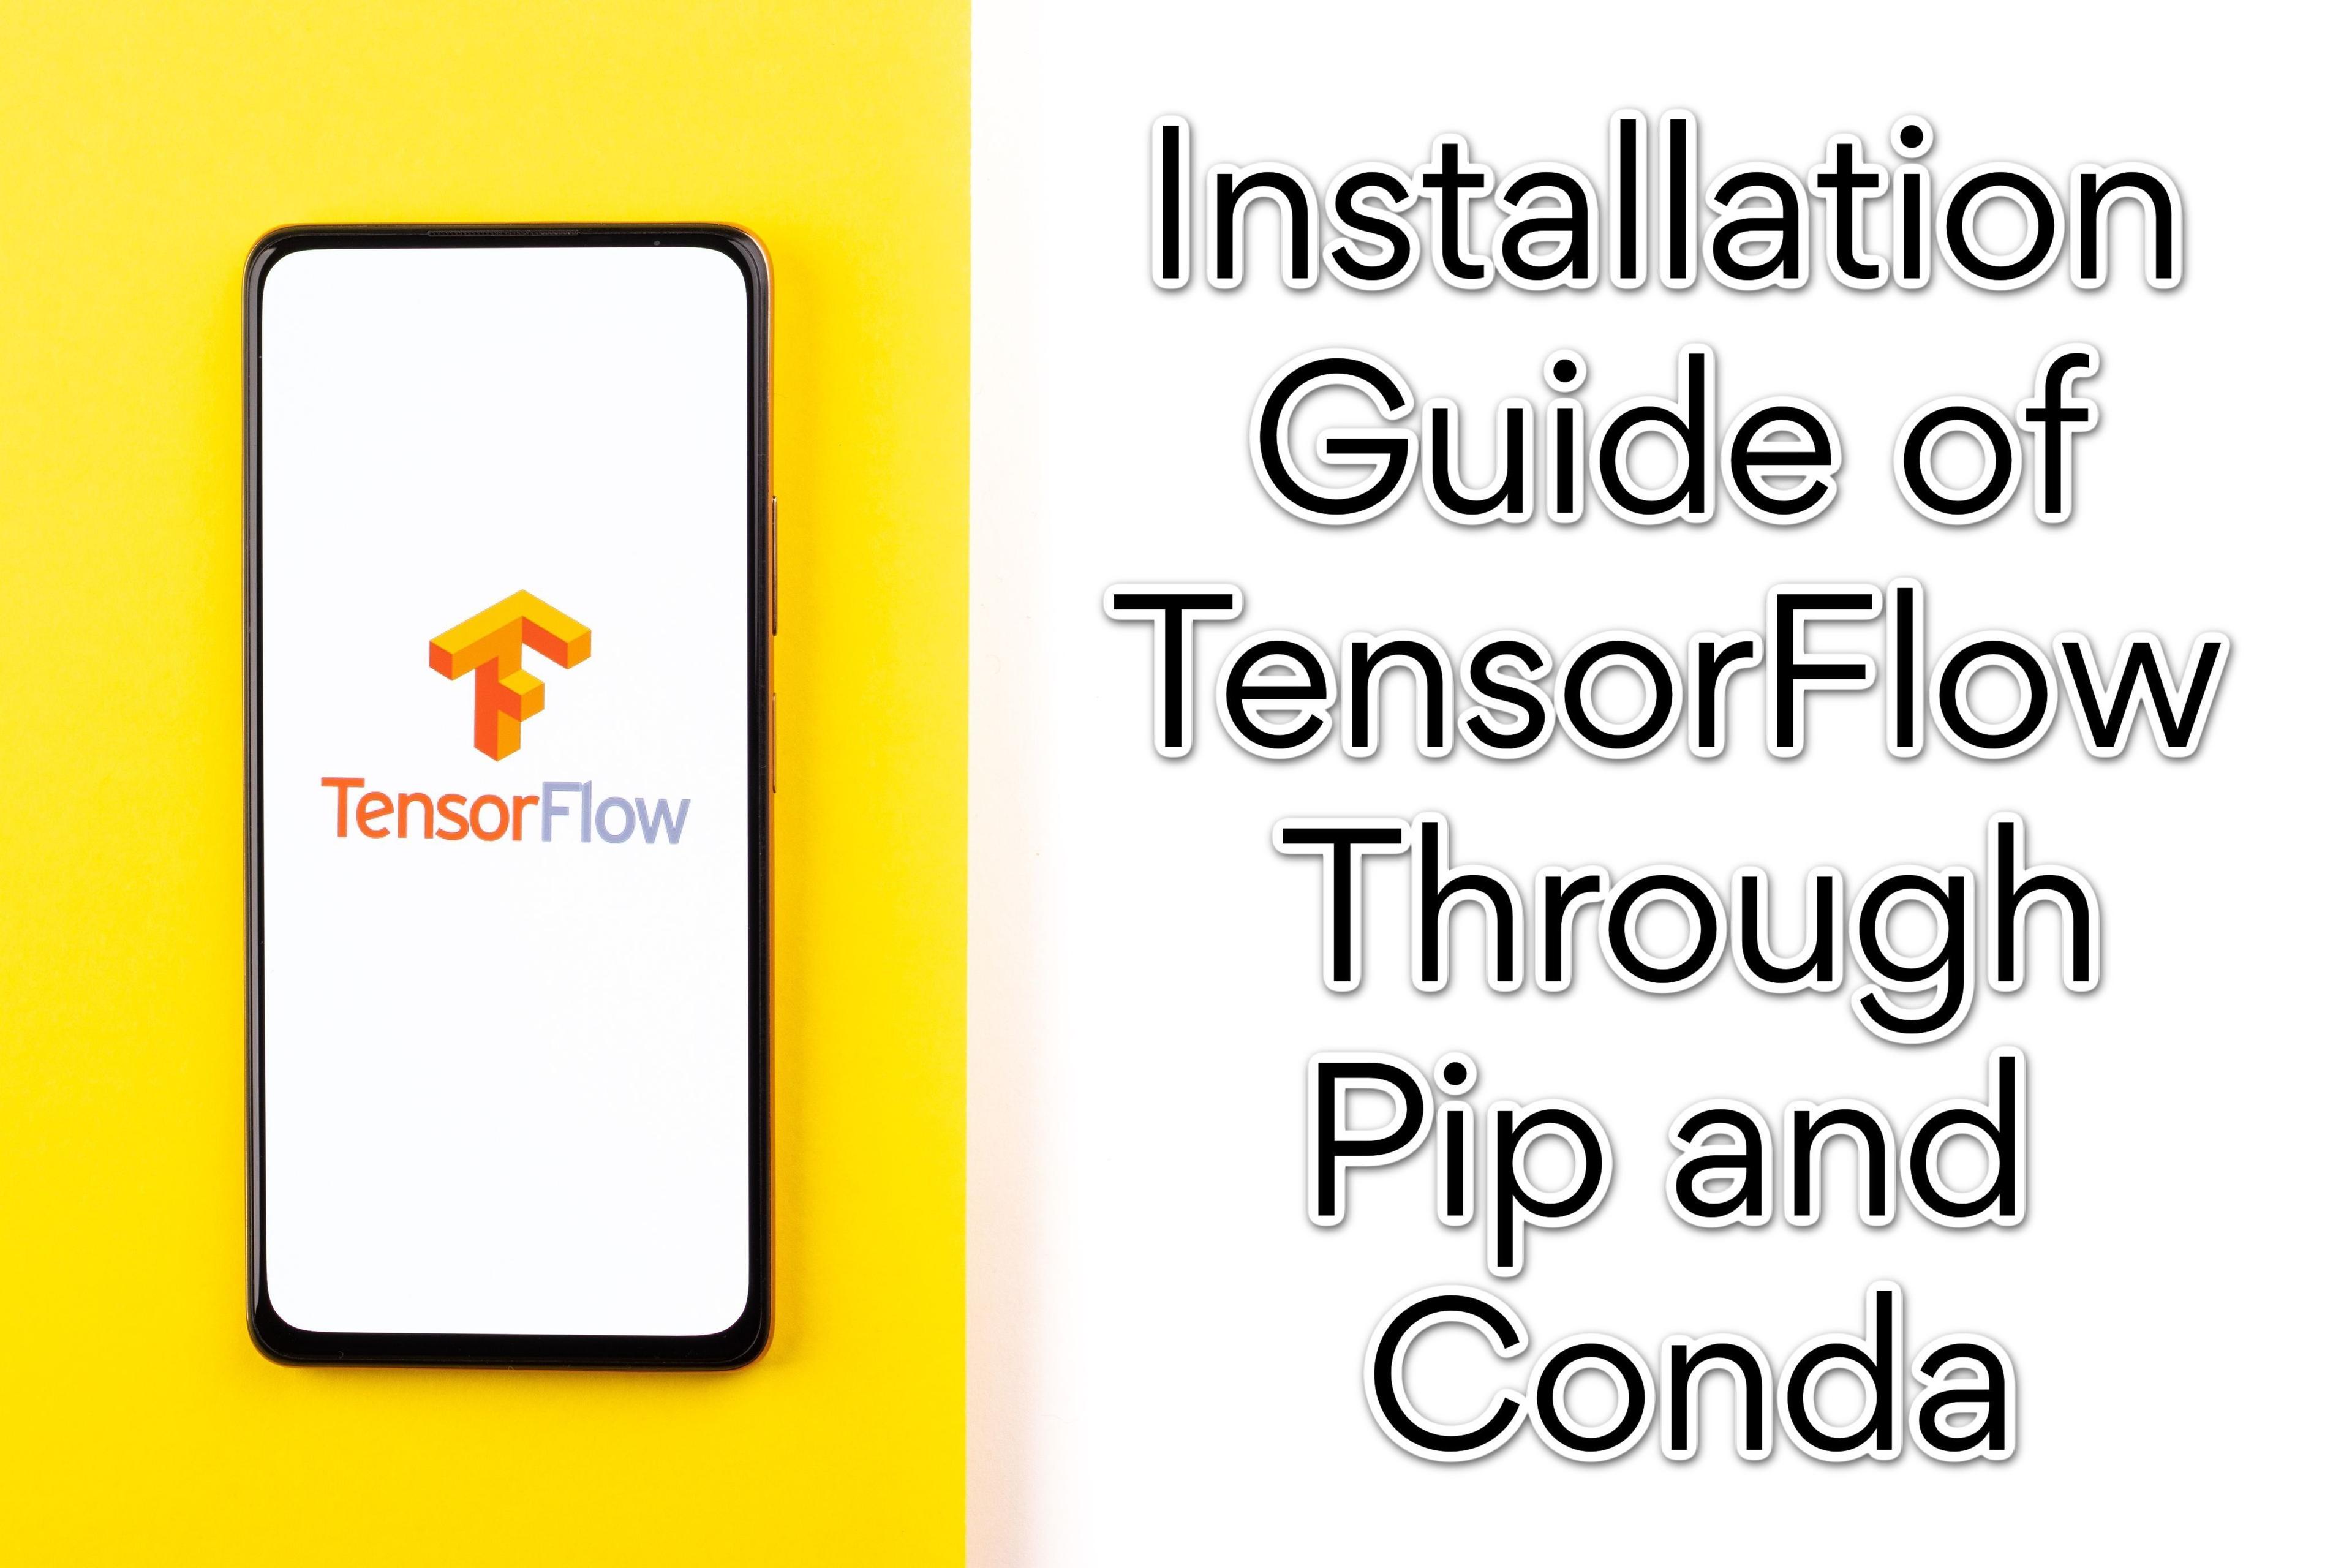 TensorFlow through pip and conda